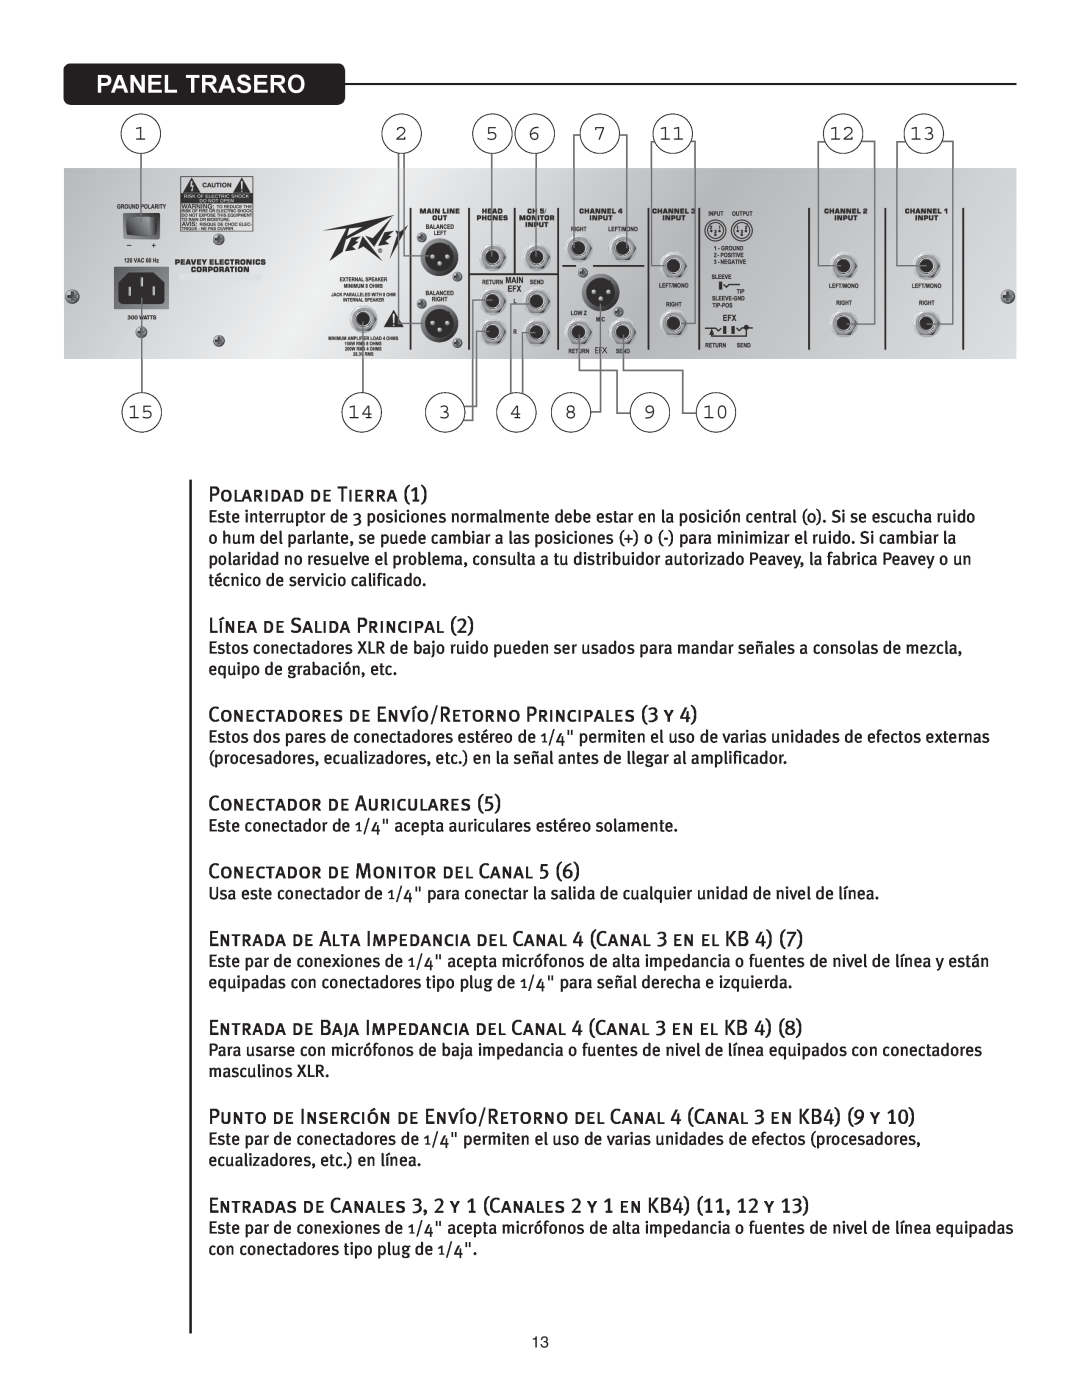 Peavey KB4/KB5 owner manual Panel Trasero 